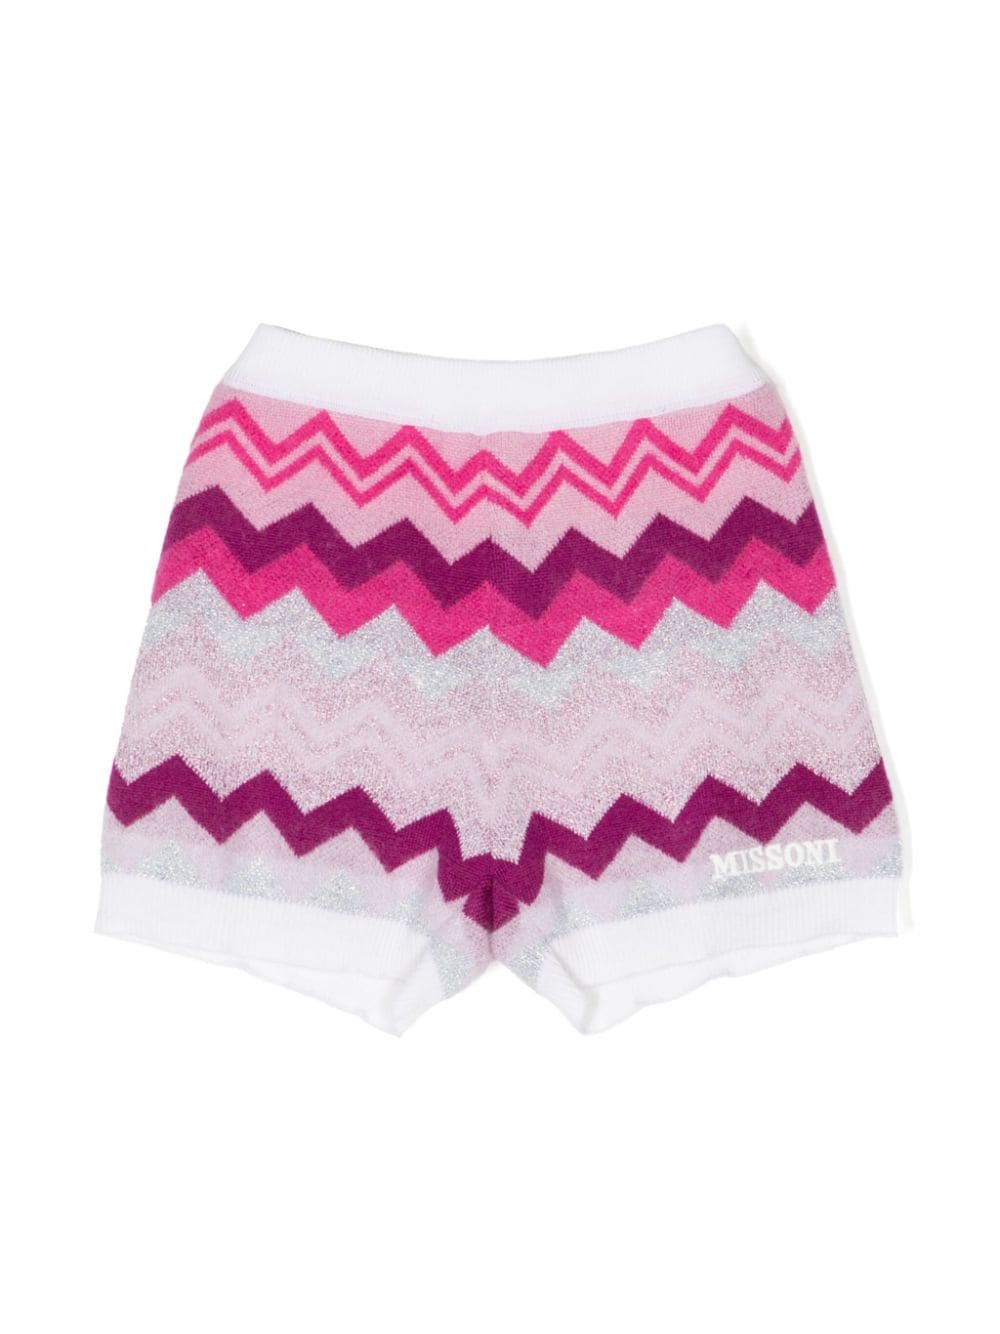 Missoni Kids zigzag woven slip-on shorts - Pink von Missoni Kids